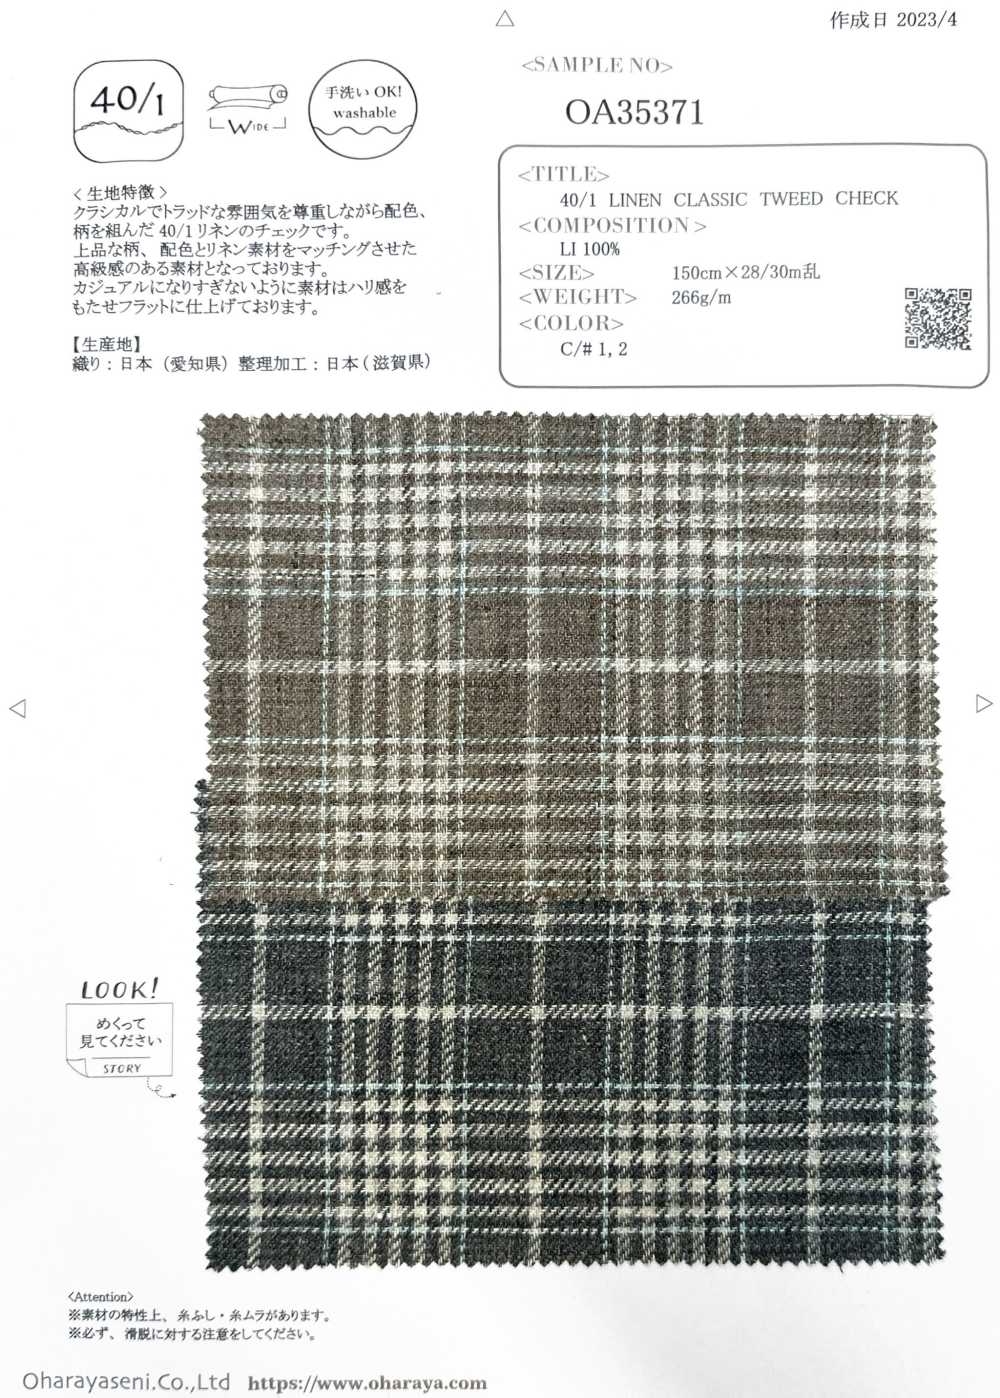 OA35371 40/1 LINHO TWEED CLÁSSICO CHECK[Têxtil / Tecido] Oharayaseni